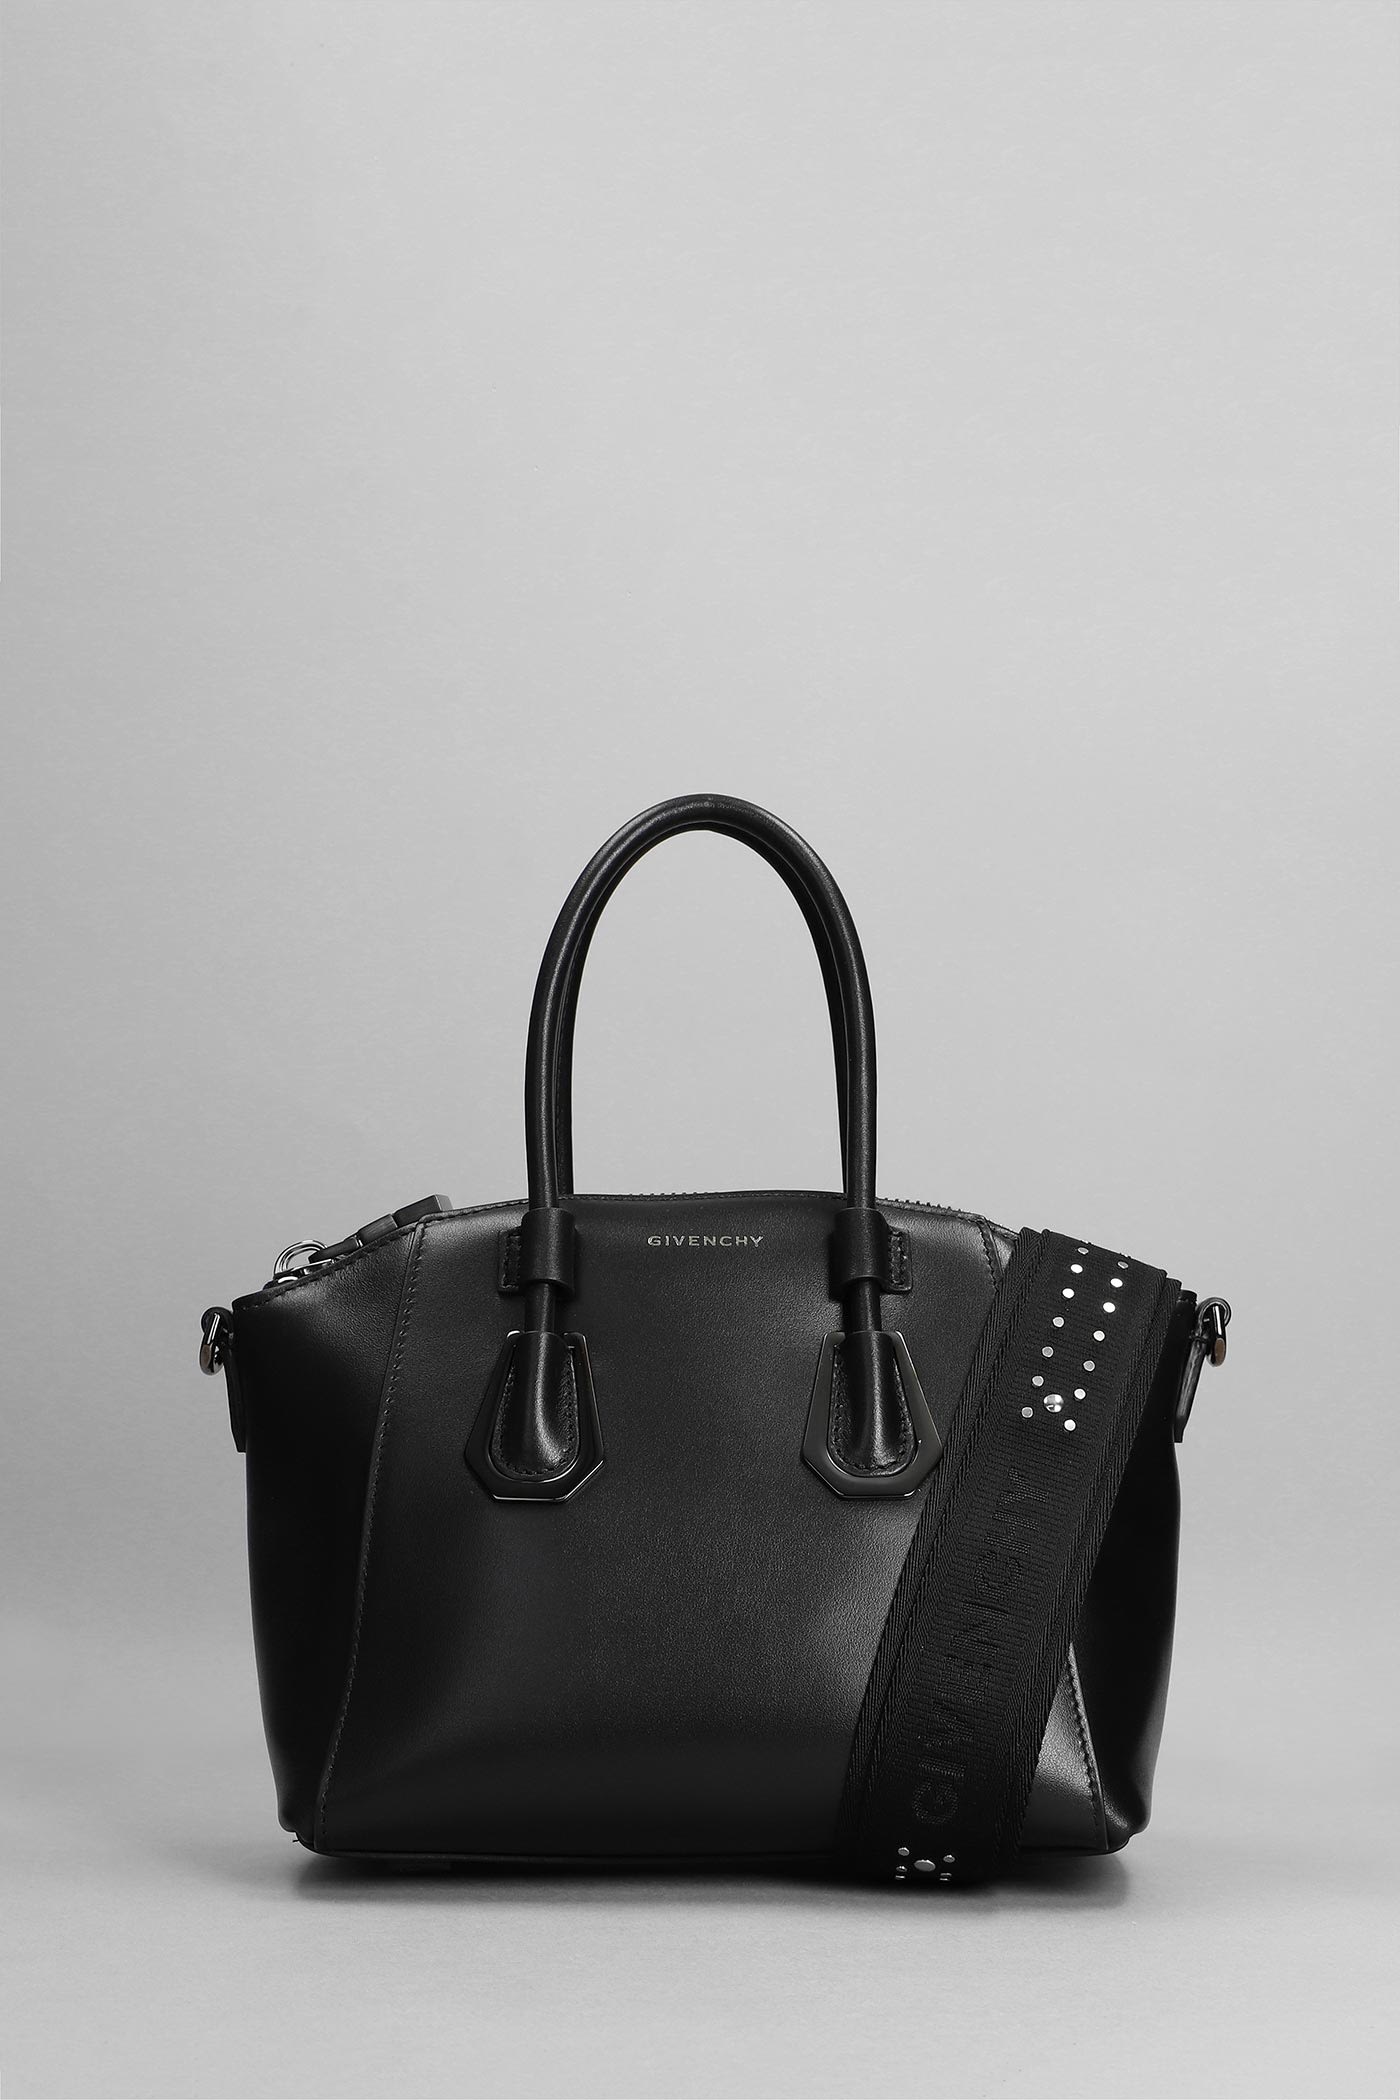 Givenchy Antigona Sport Hand Bag In Black Leather